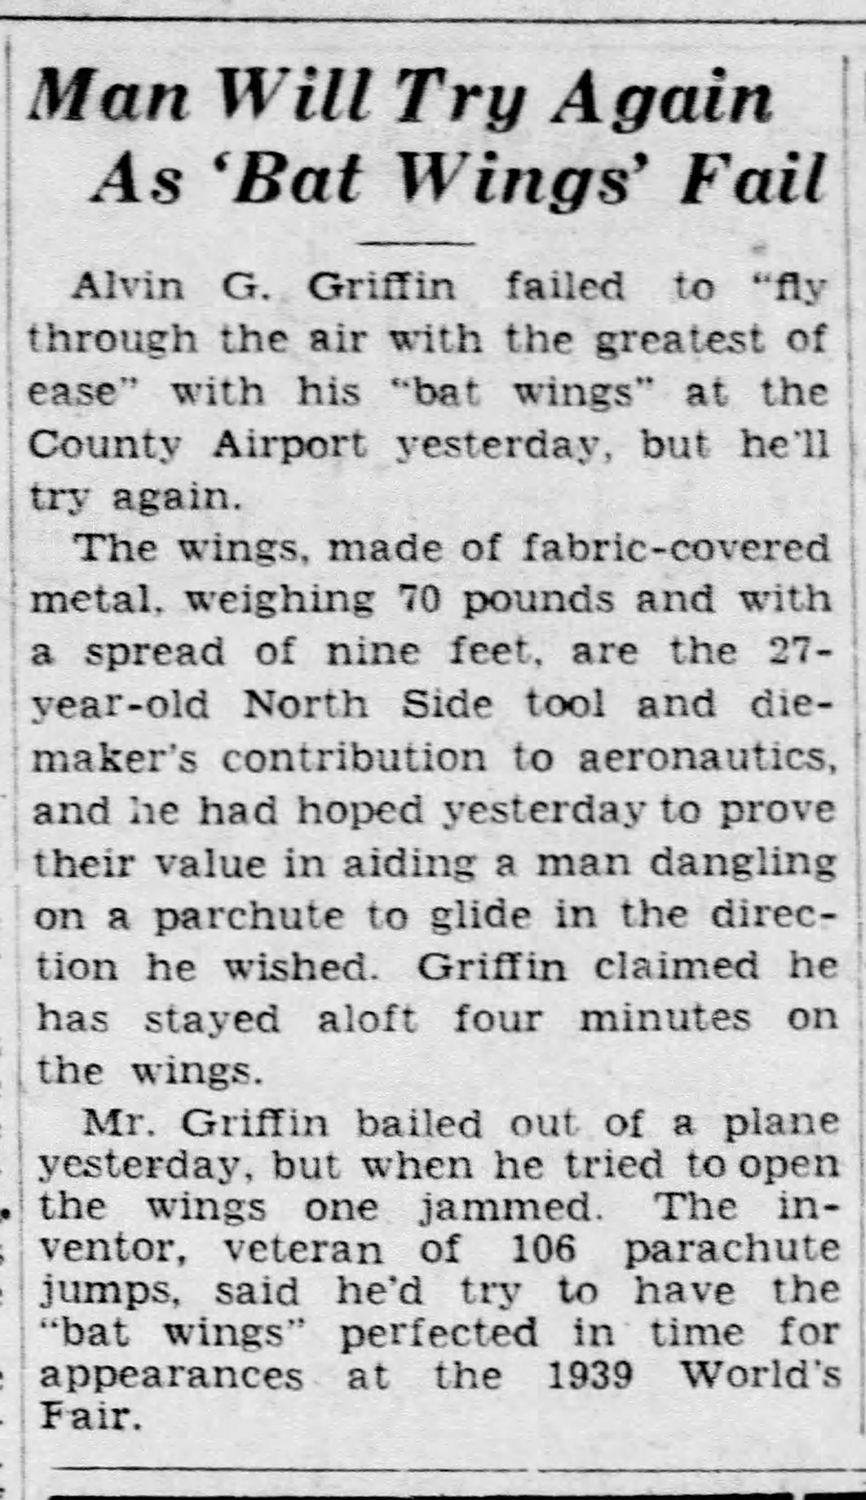 “Man Will Try Again As “Bat Wings” Fail,” The Pittsburgh Press, June 1, 1938.